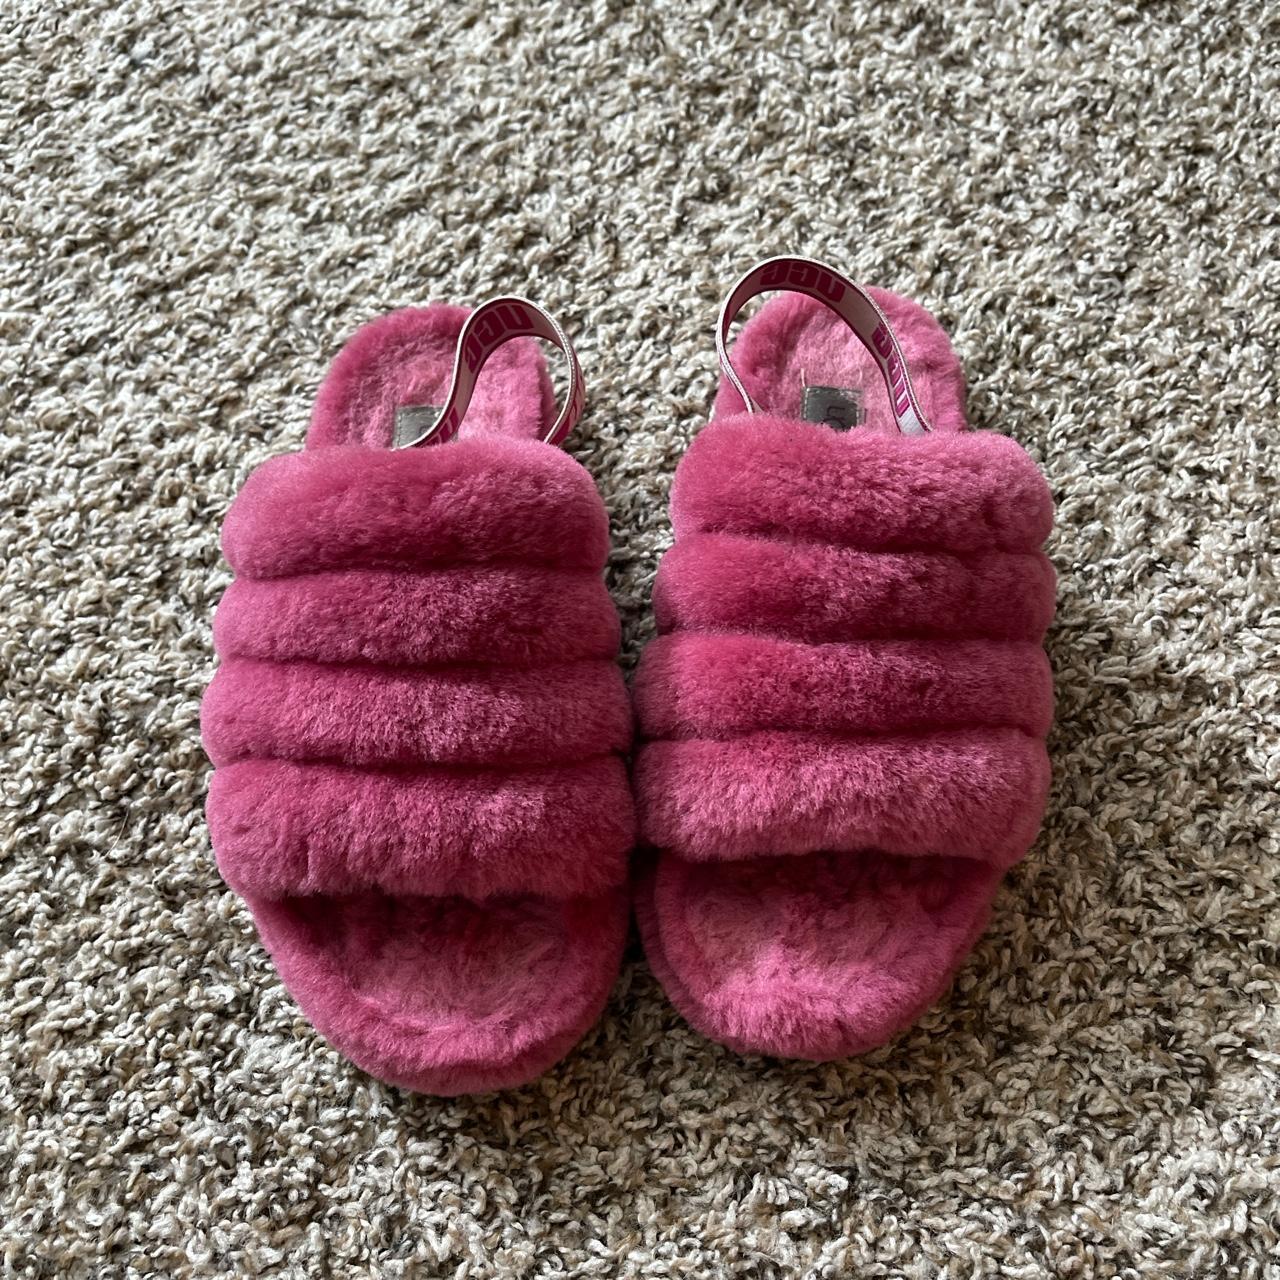 New Ugg Australia Cozy II scuff slip-on slippers kids youth wild berries  pink 4 | eBay